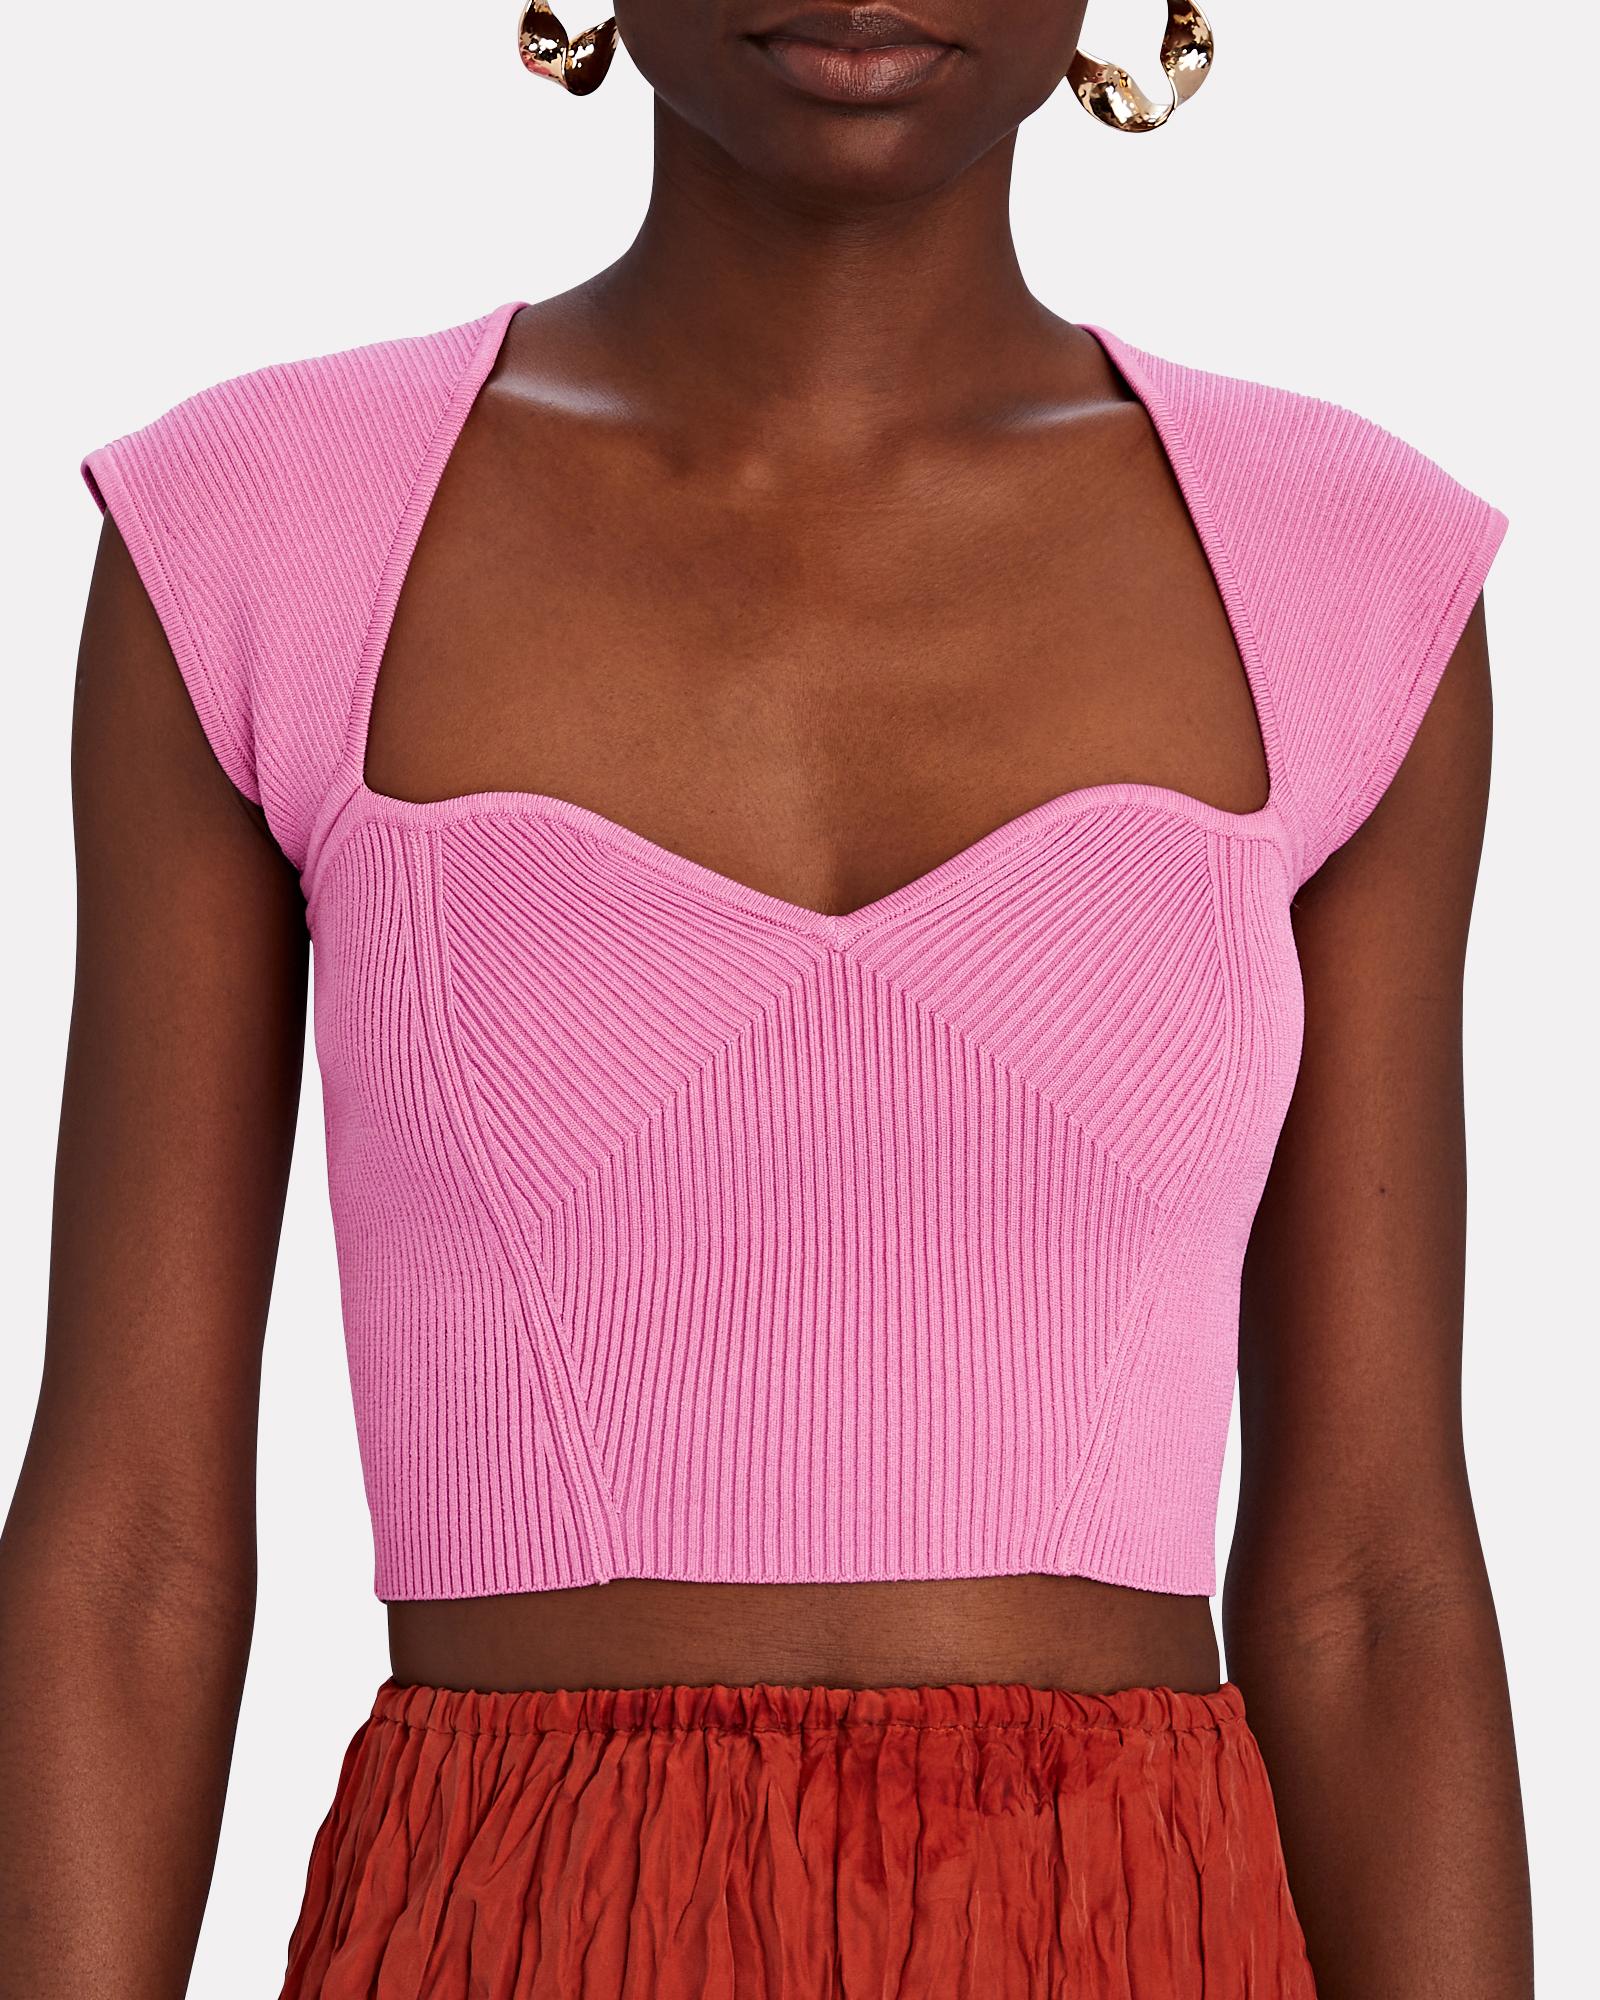 Jonathan Simkhai Abia Rib Knit Crop Top in Pink | Lyst